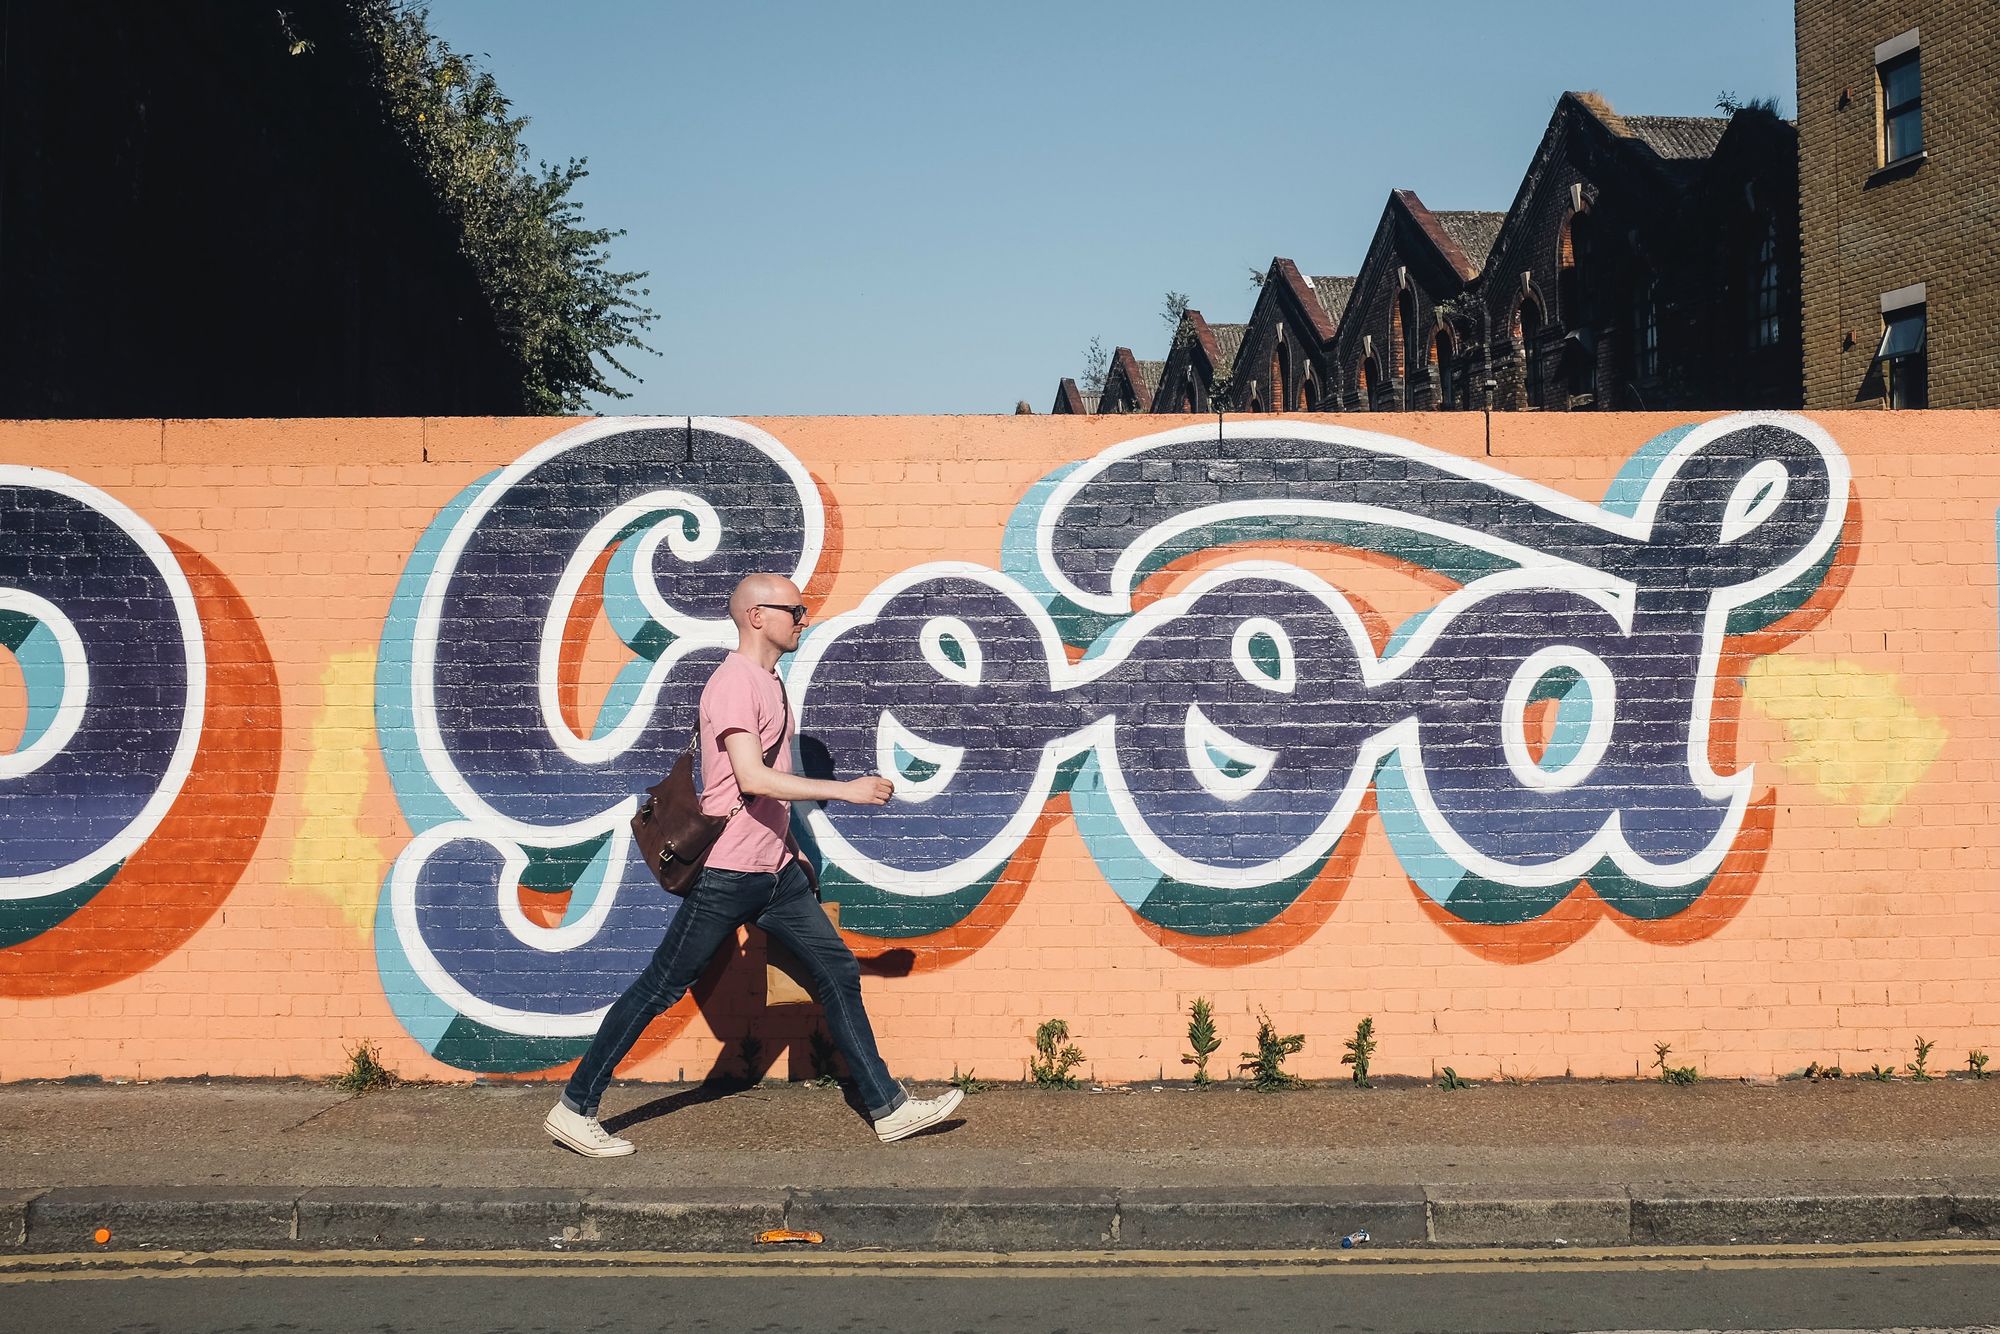 Man in pink t shirt walking beside a graffitti wall that reads "Good"